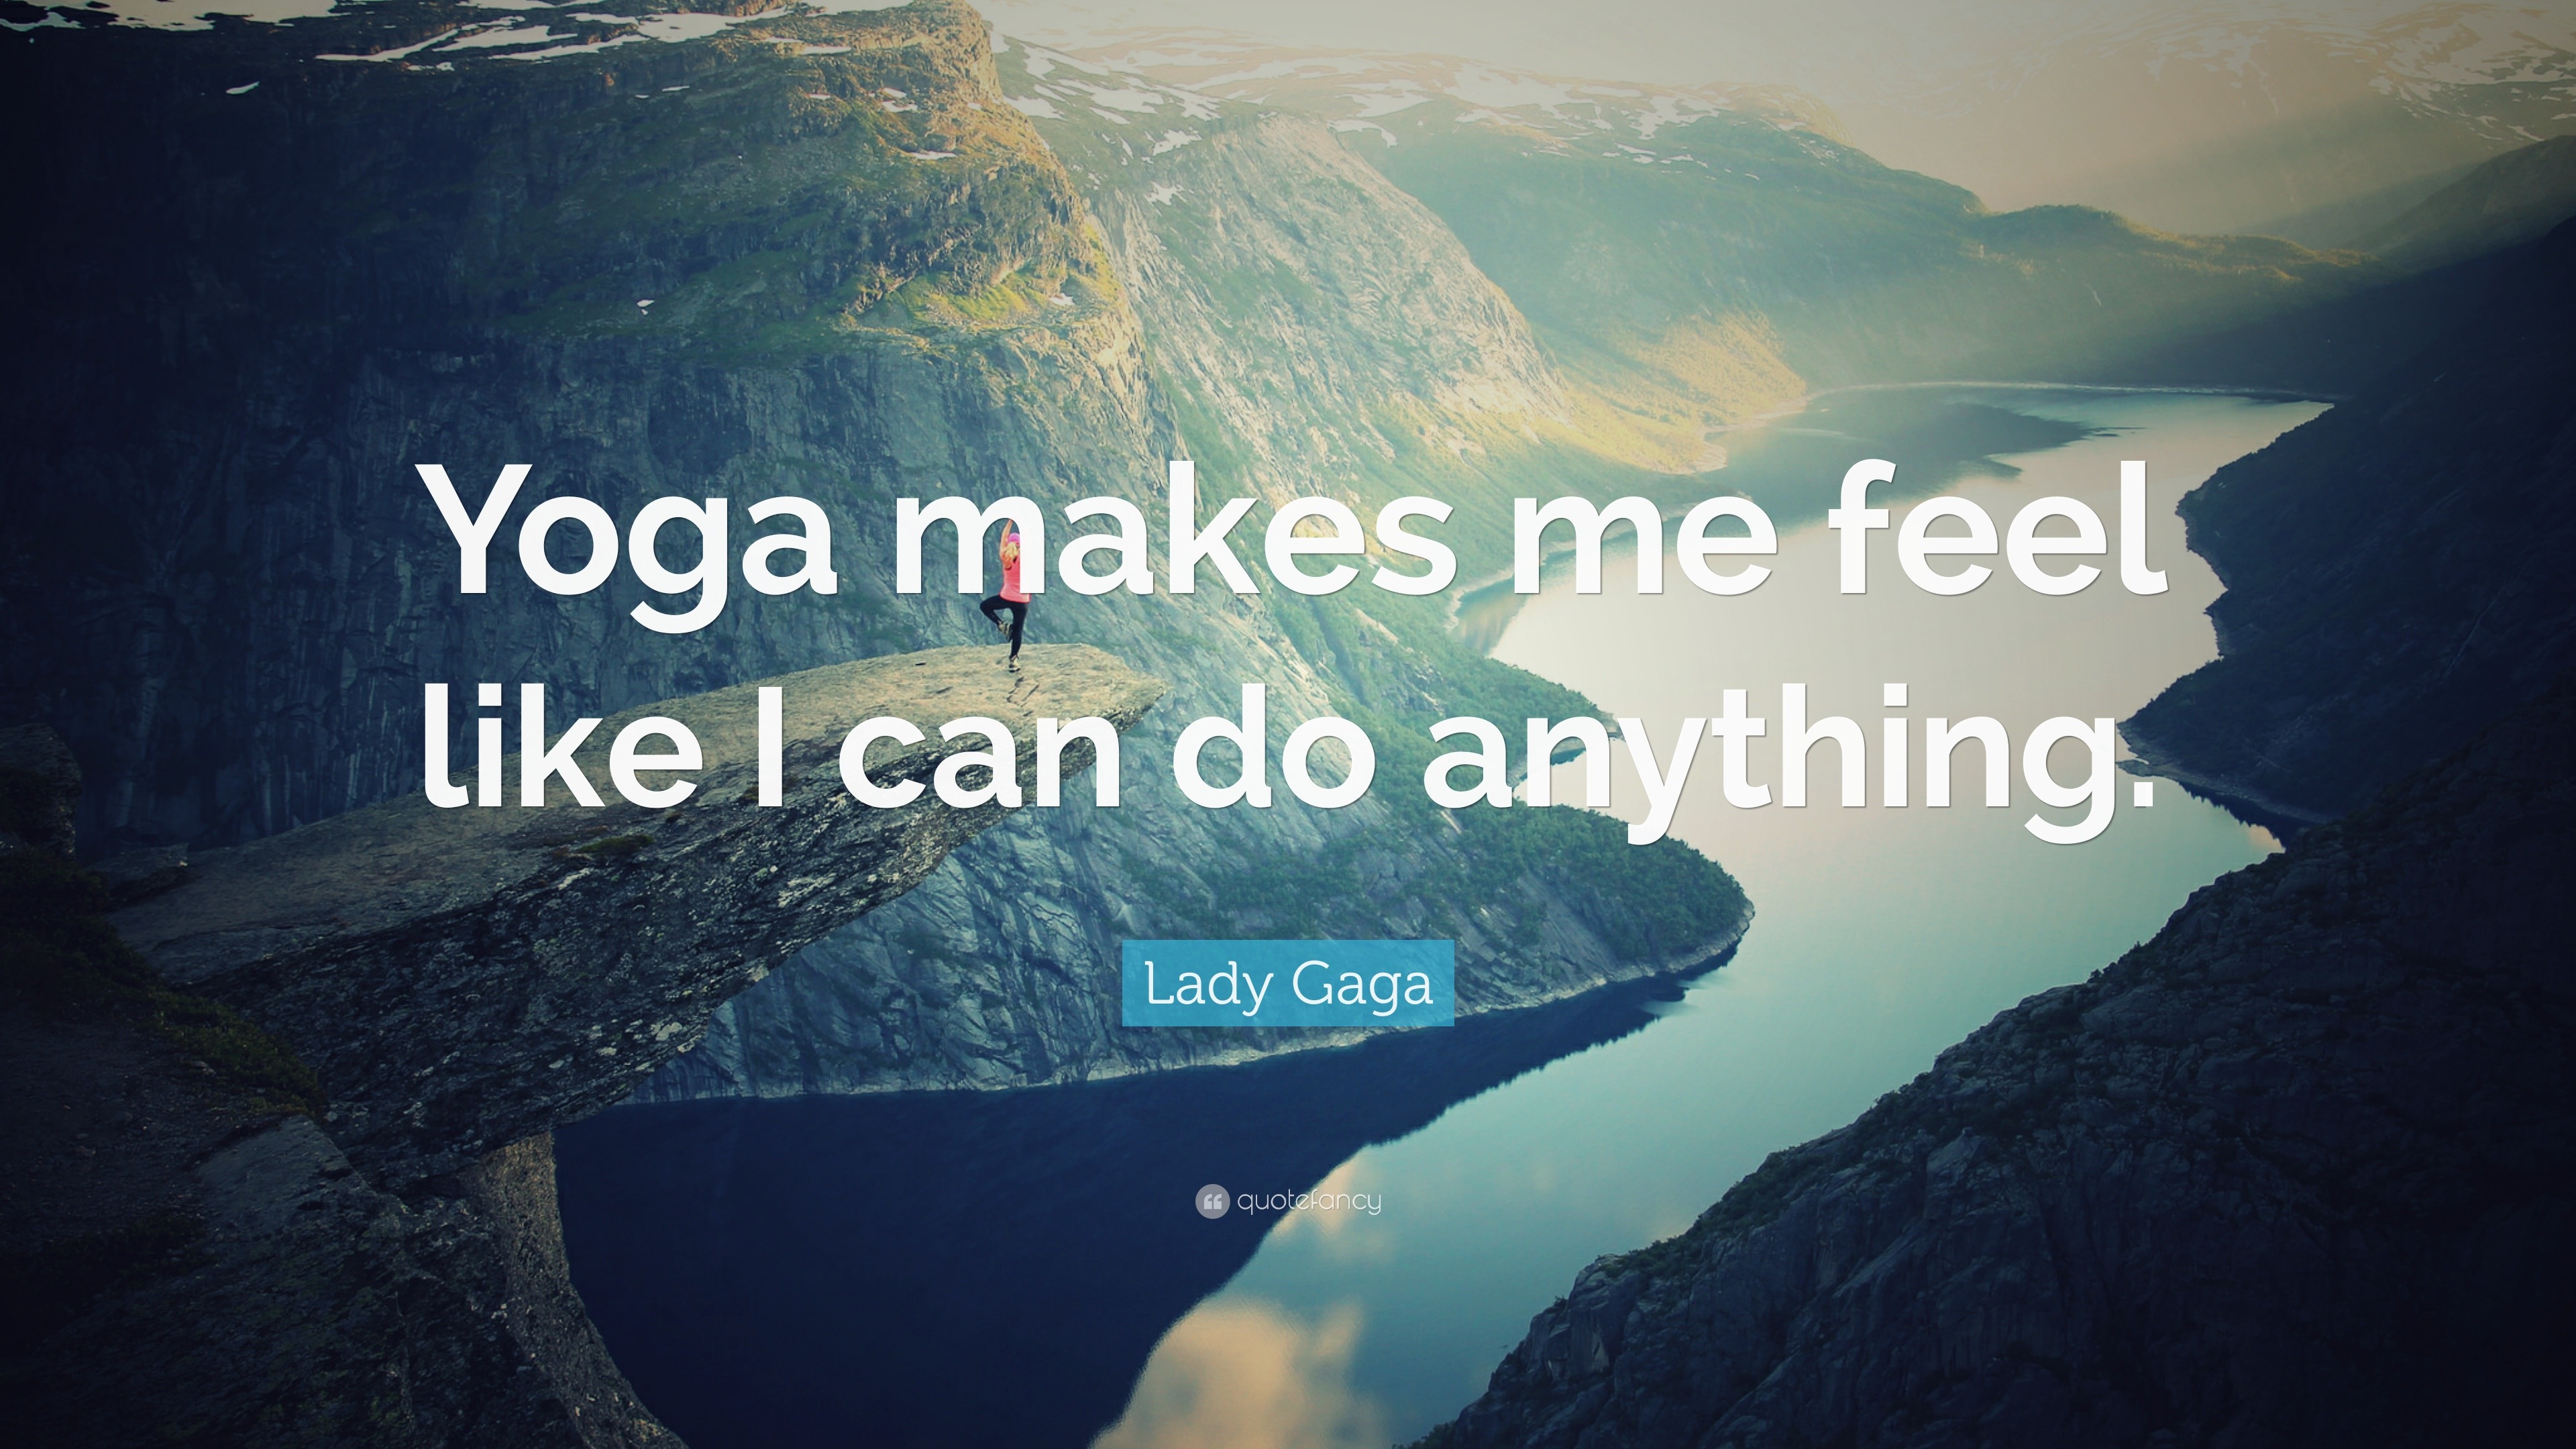 Gaga for Yoga